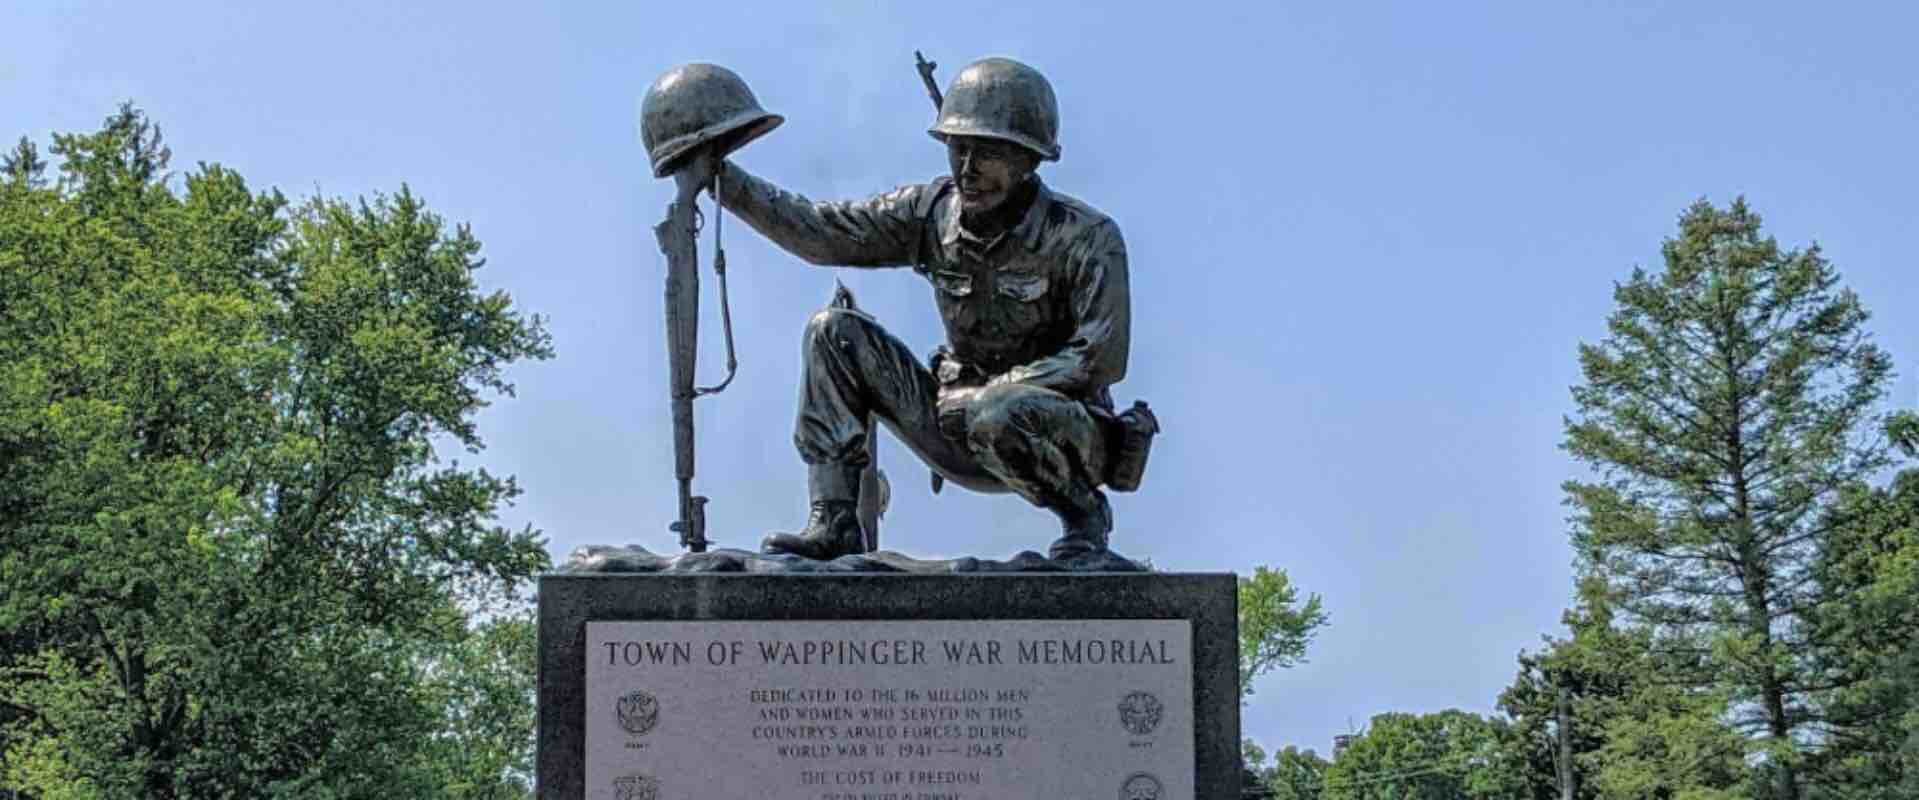 Wappinger WWII War Memorial